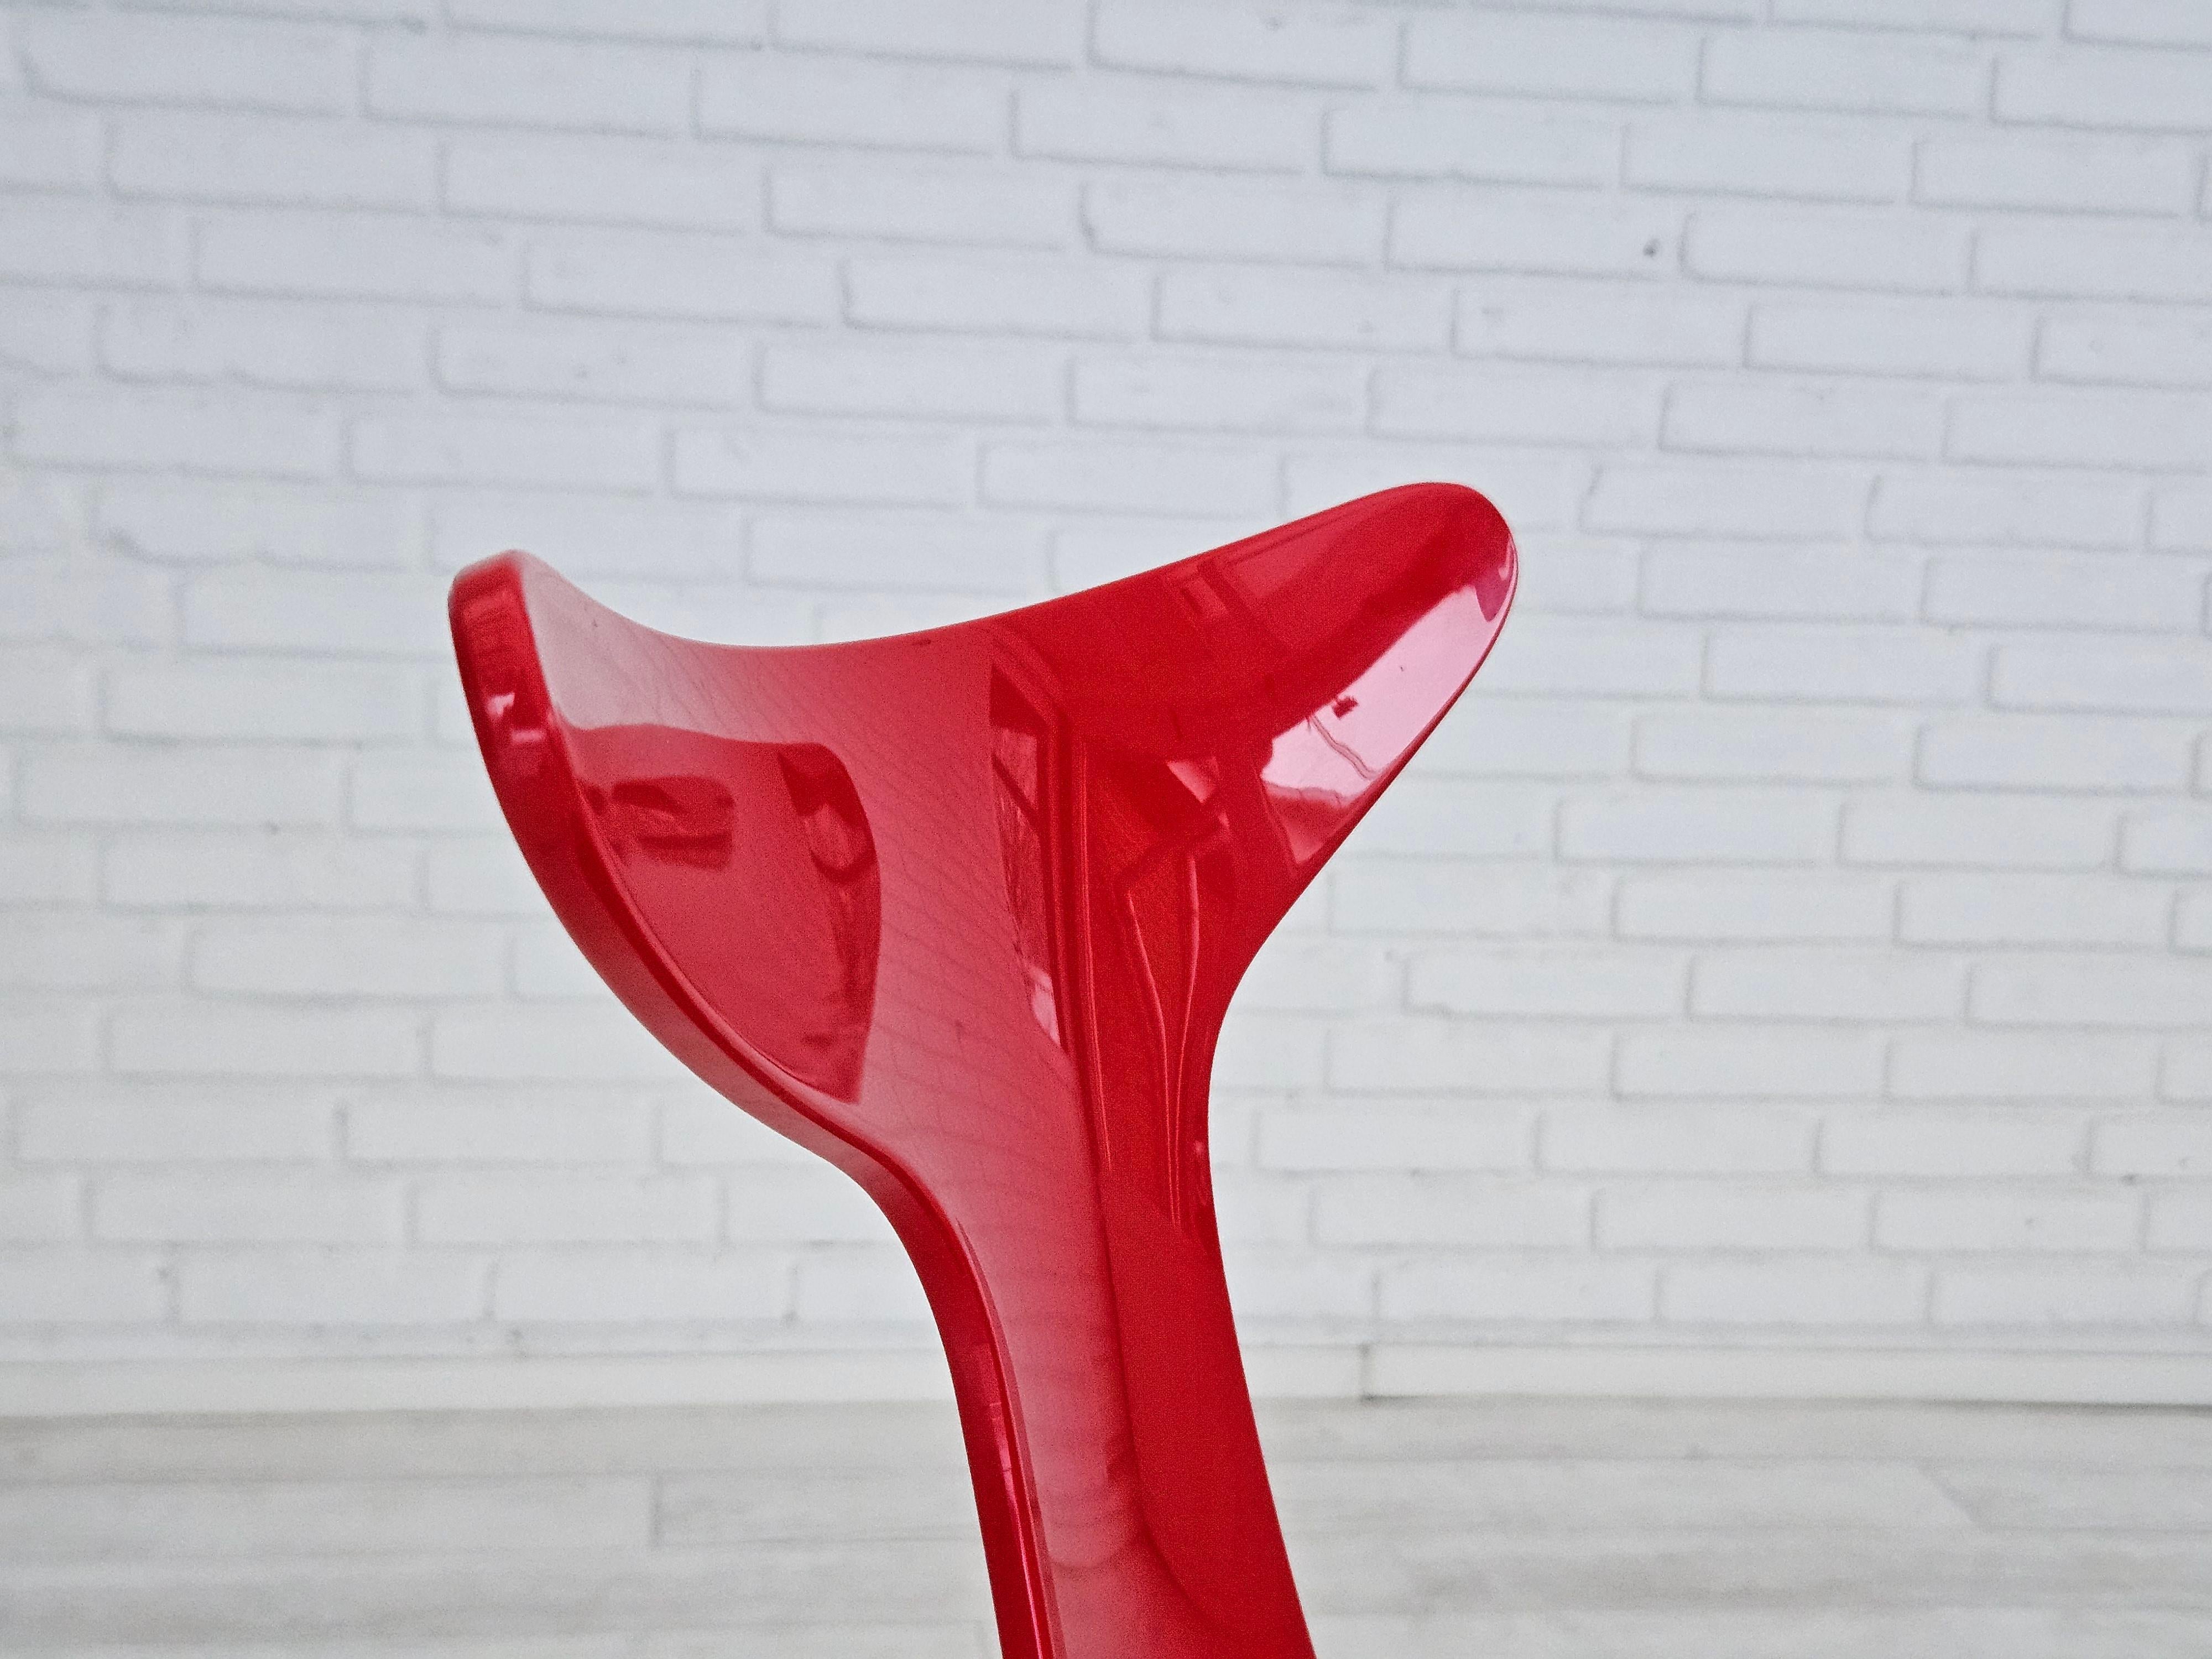 Steel 1990s, Italian design by Gino Carollo, set of 4 chairs, model 